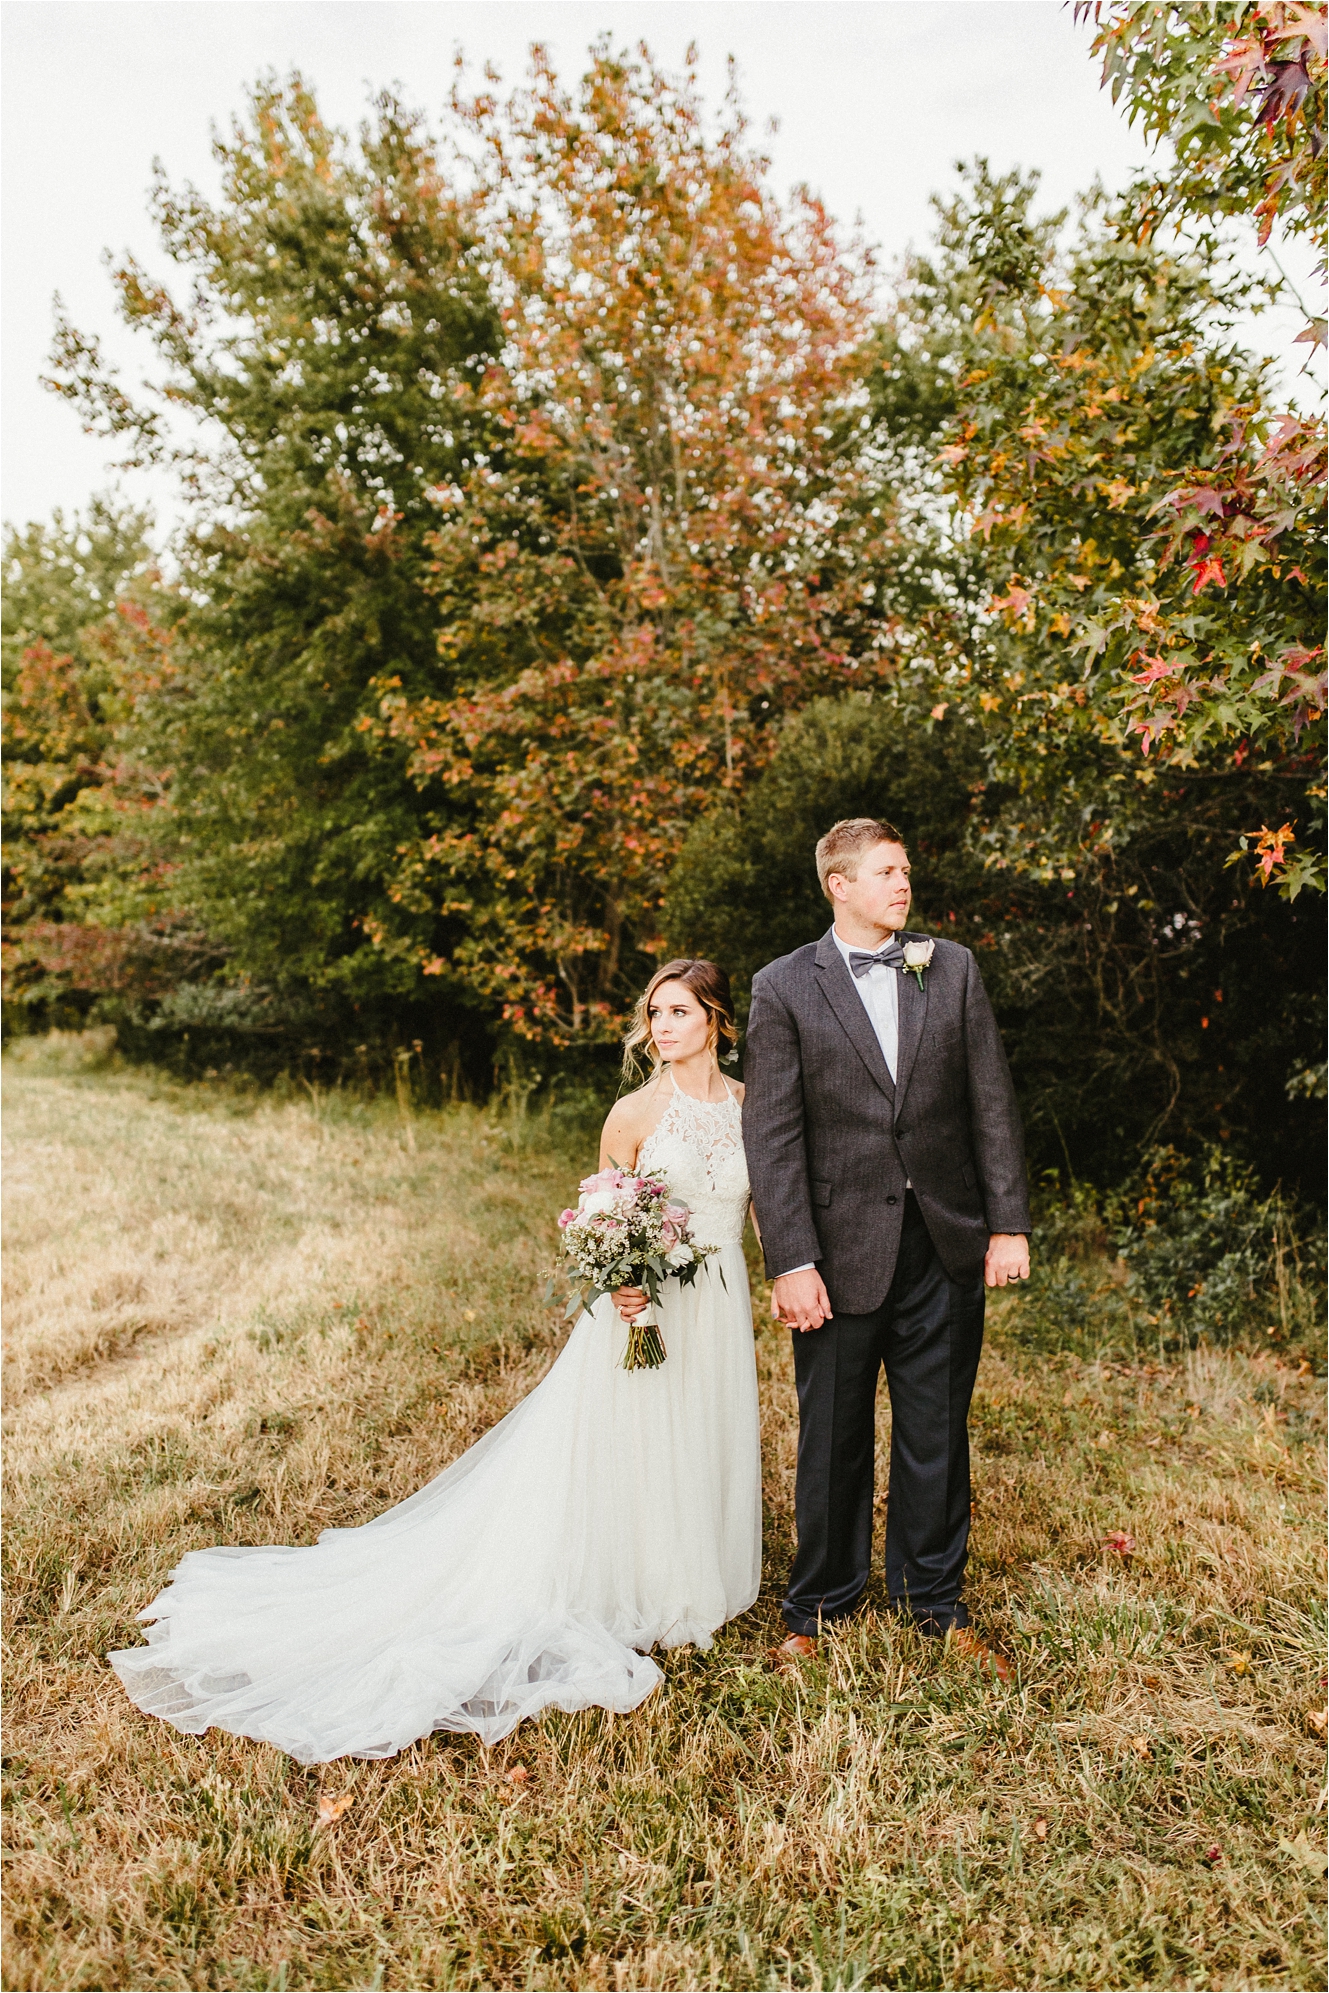 Casey + Emily | Southern Maryland Wedding Photographer-250.jpg